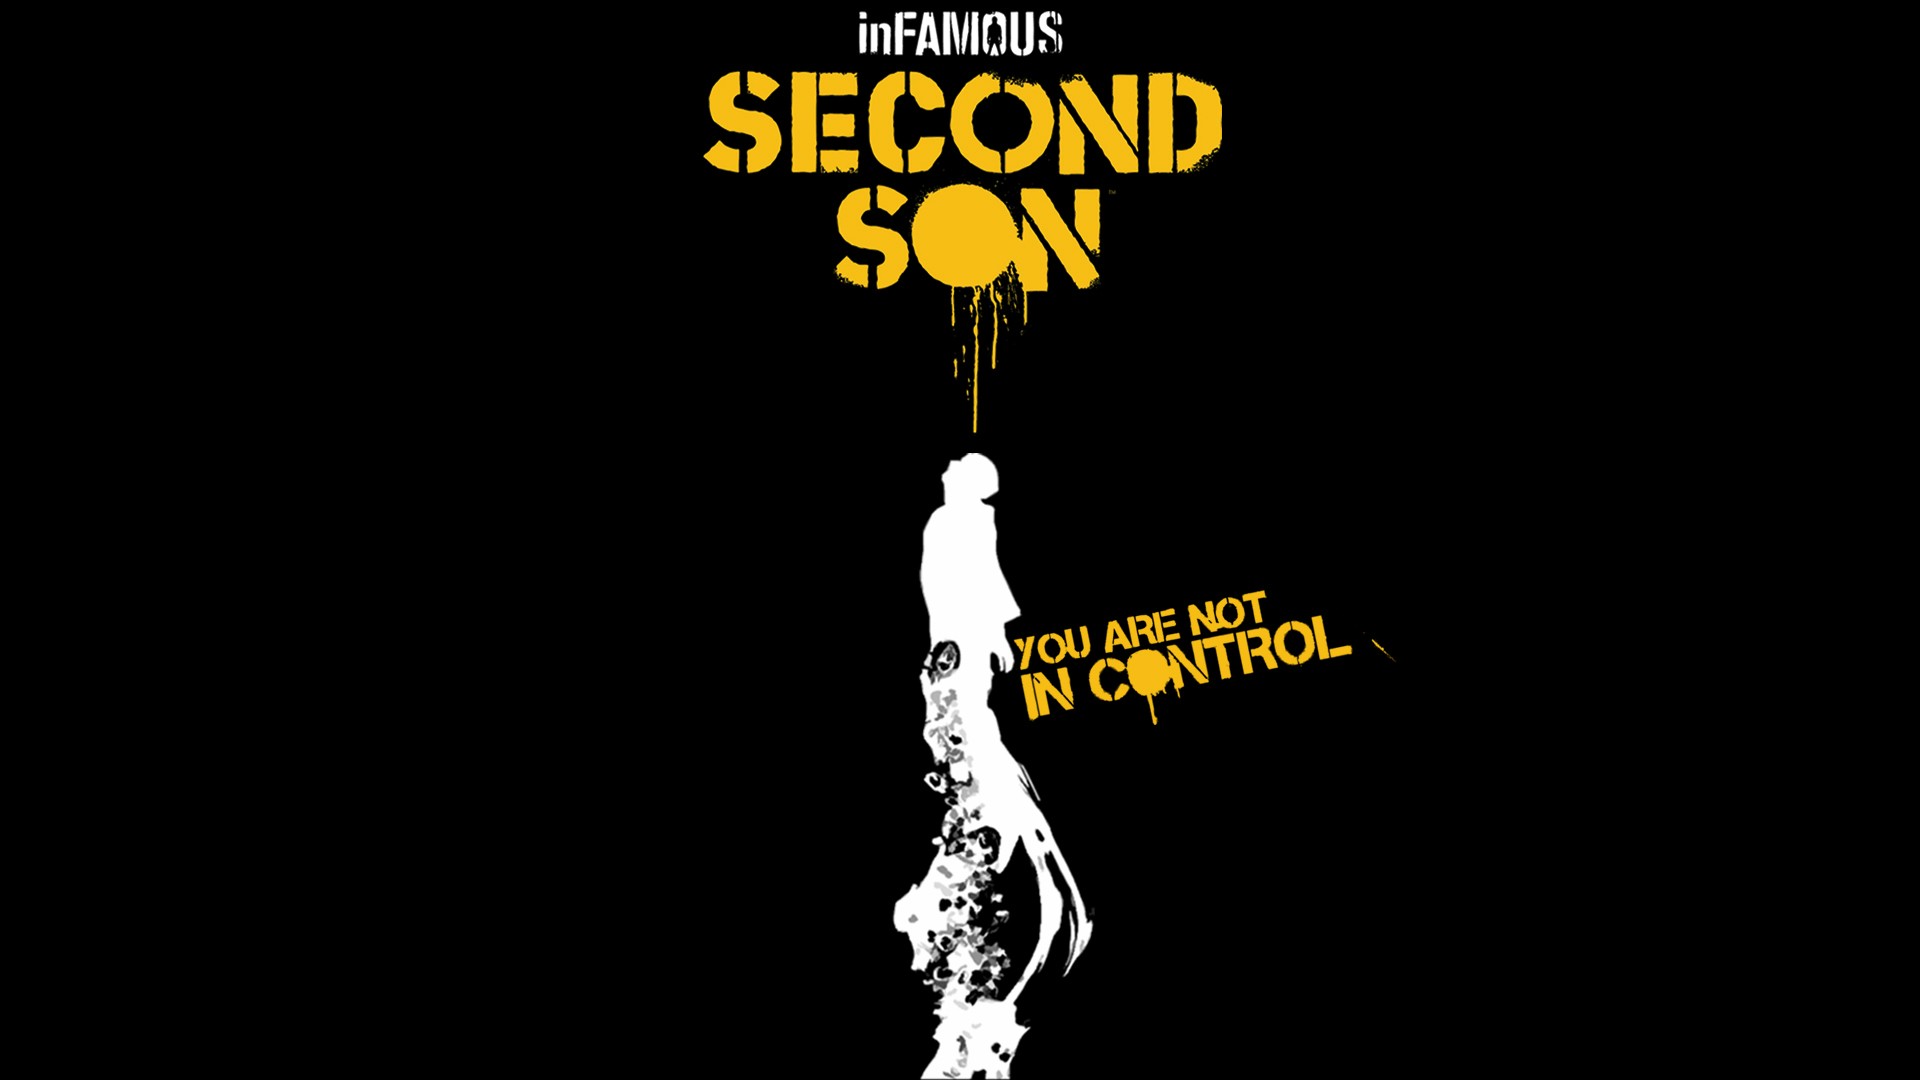    inFamous: Second Son